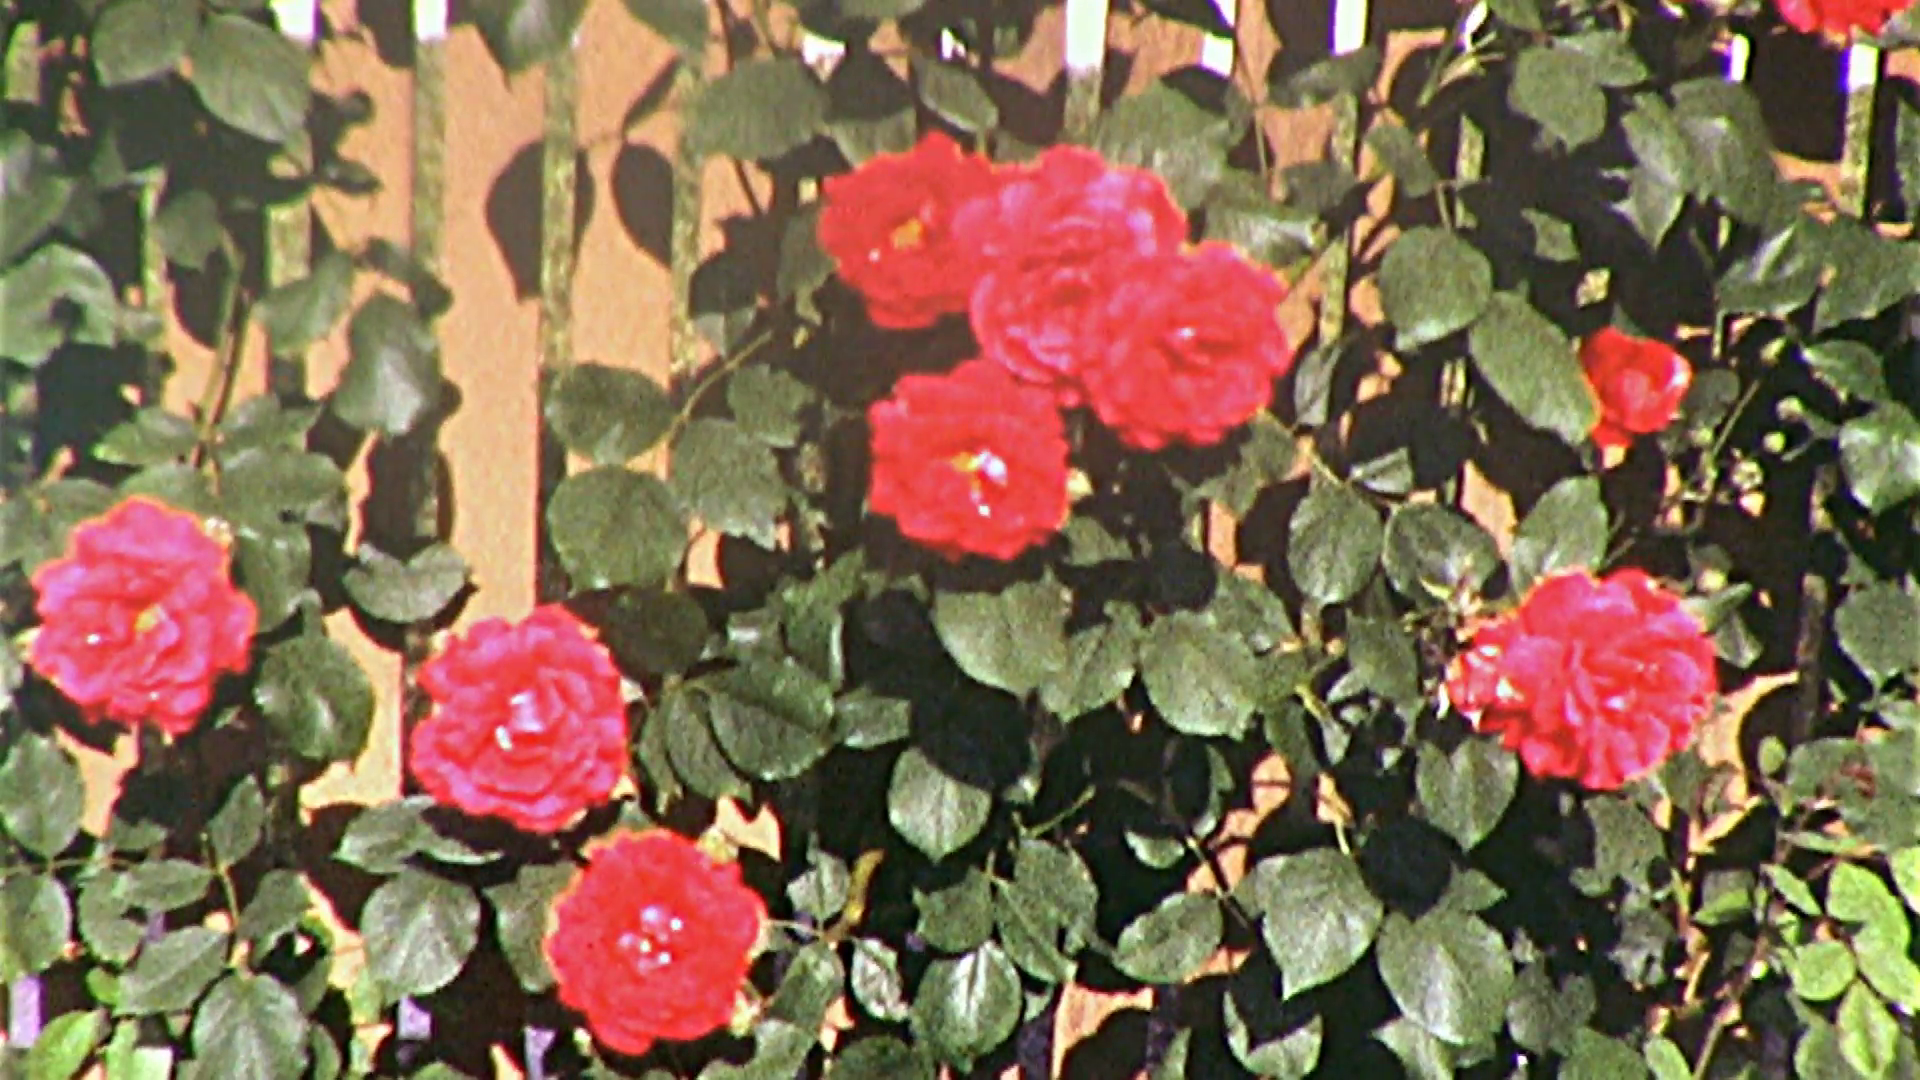 Old Women in Flower Rose Garden Flowers Grow 1950s Vintage Film Home ...